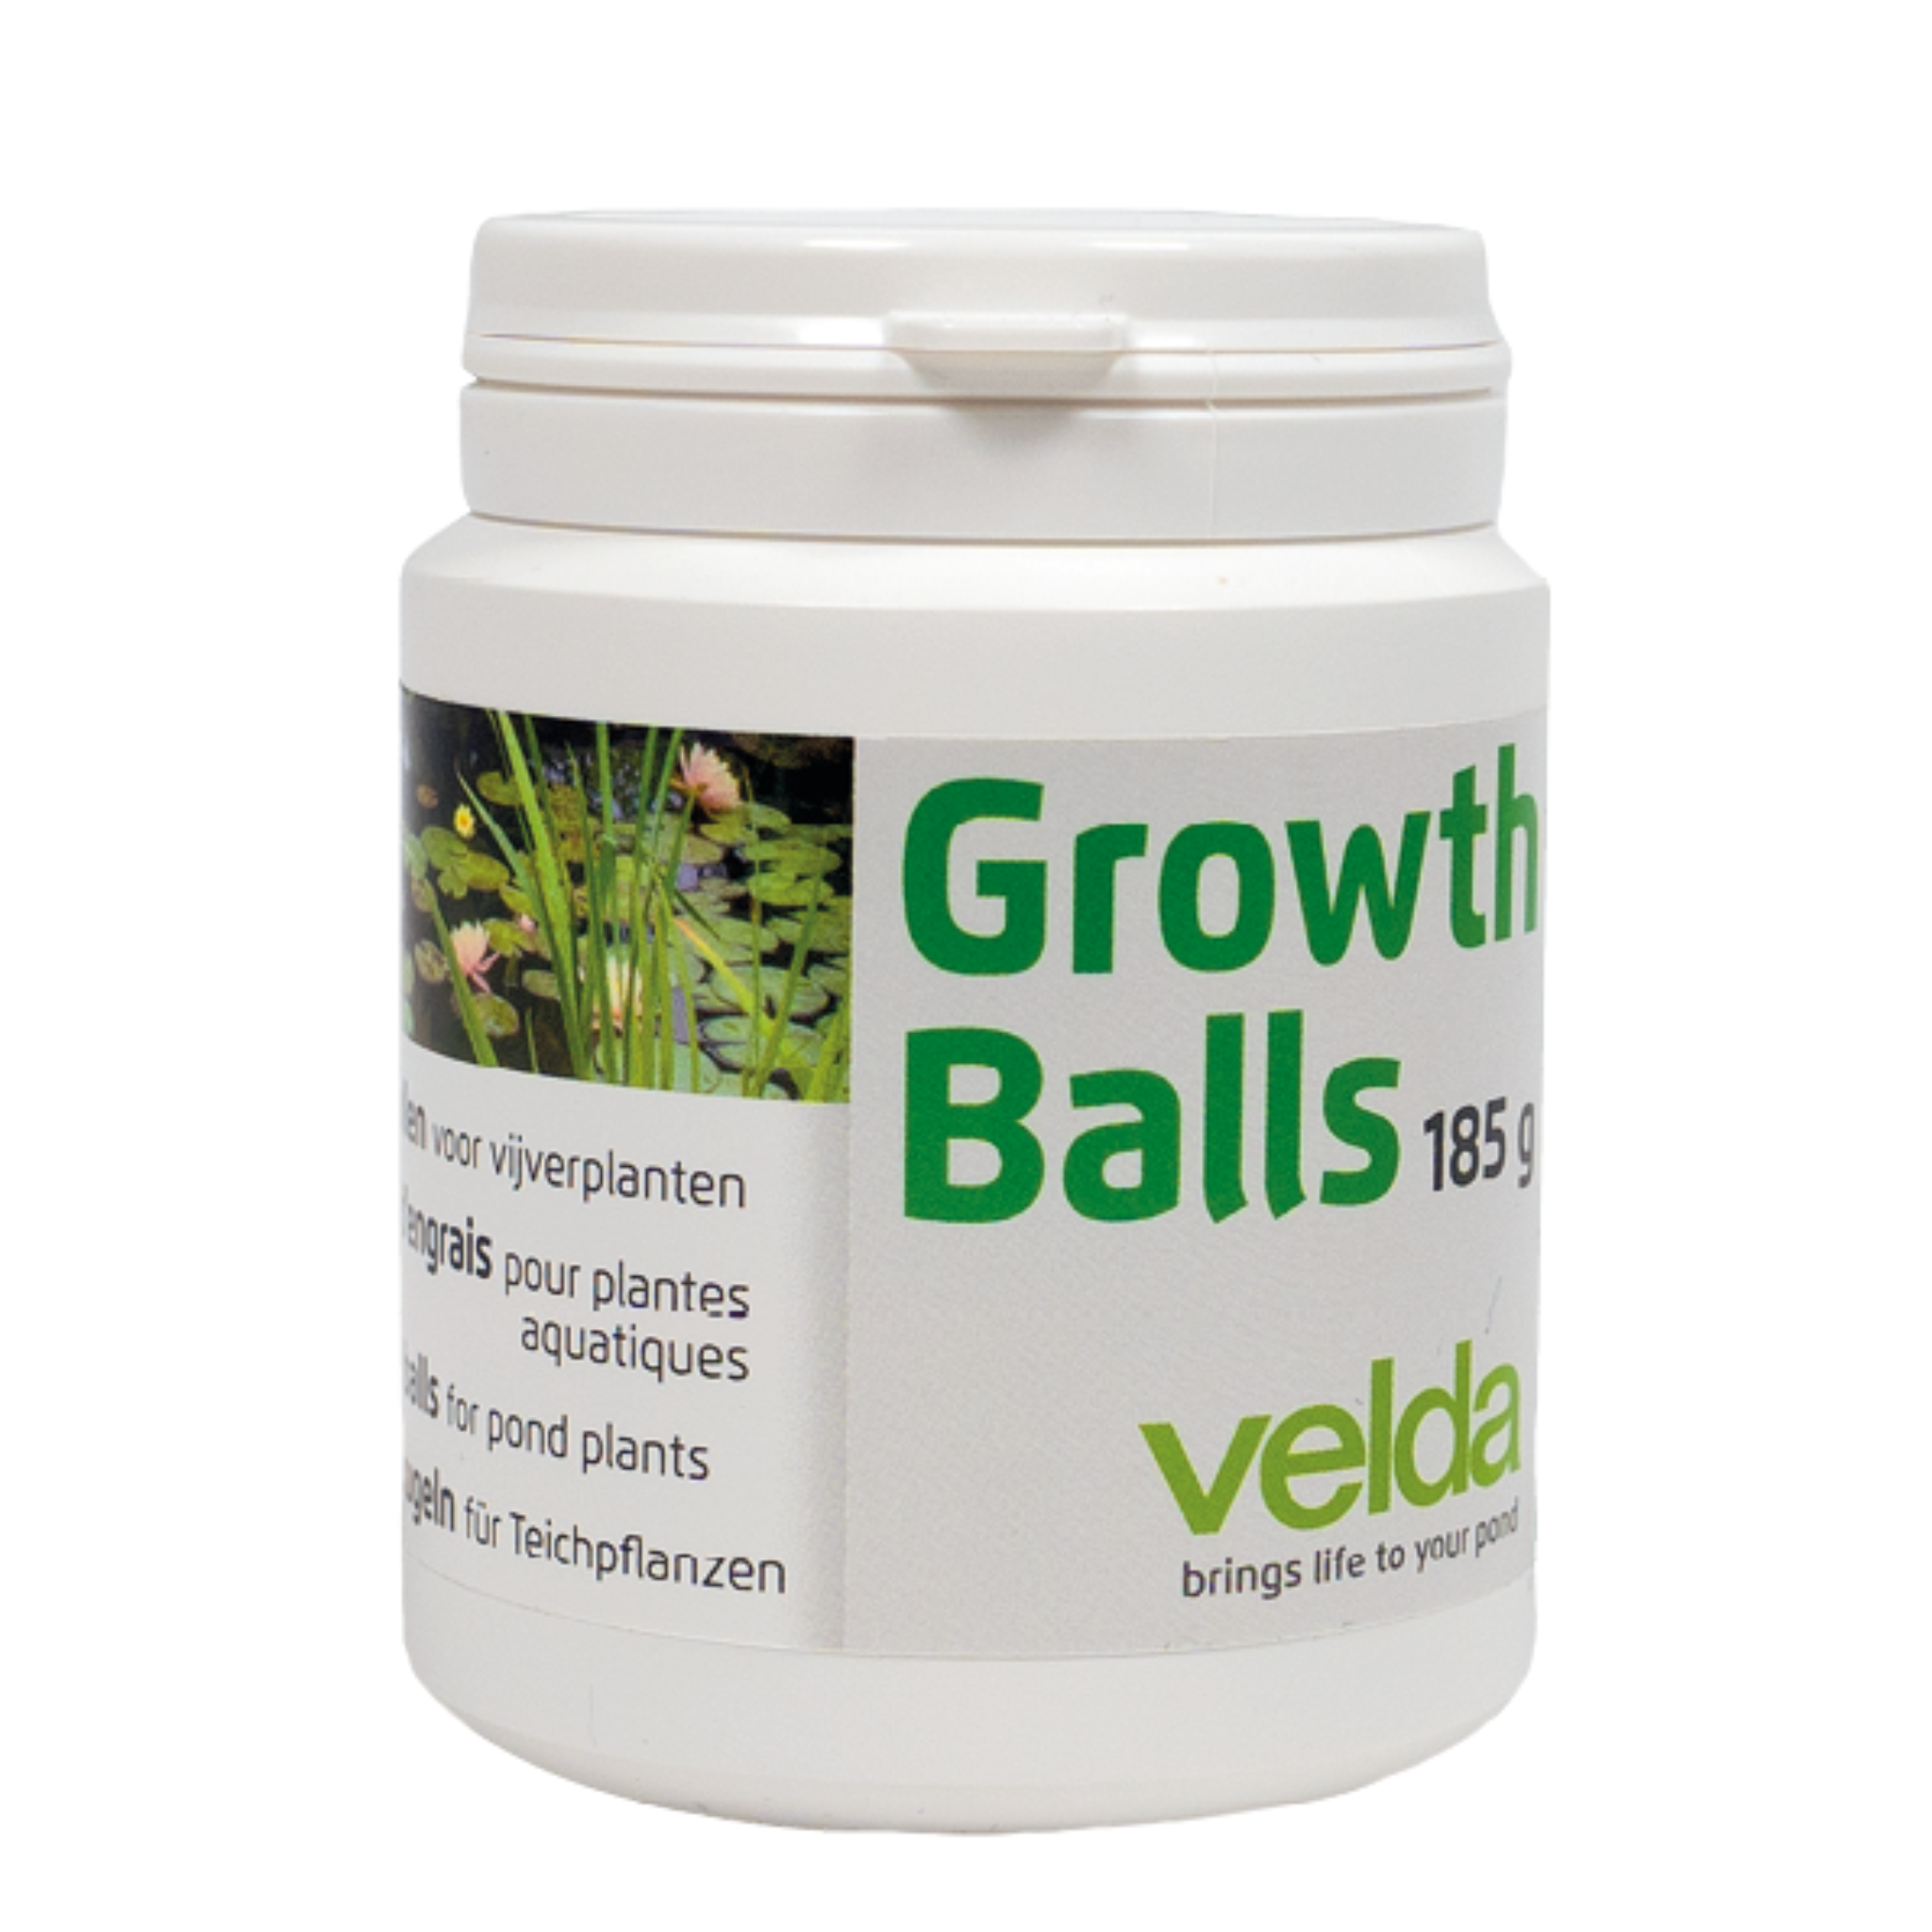 Growthballs Velda